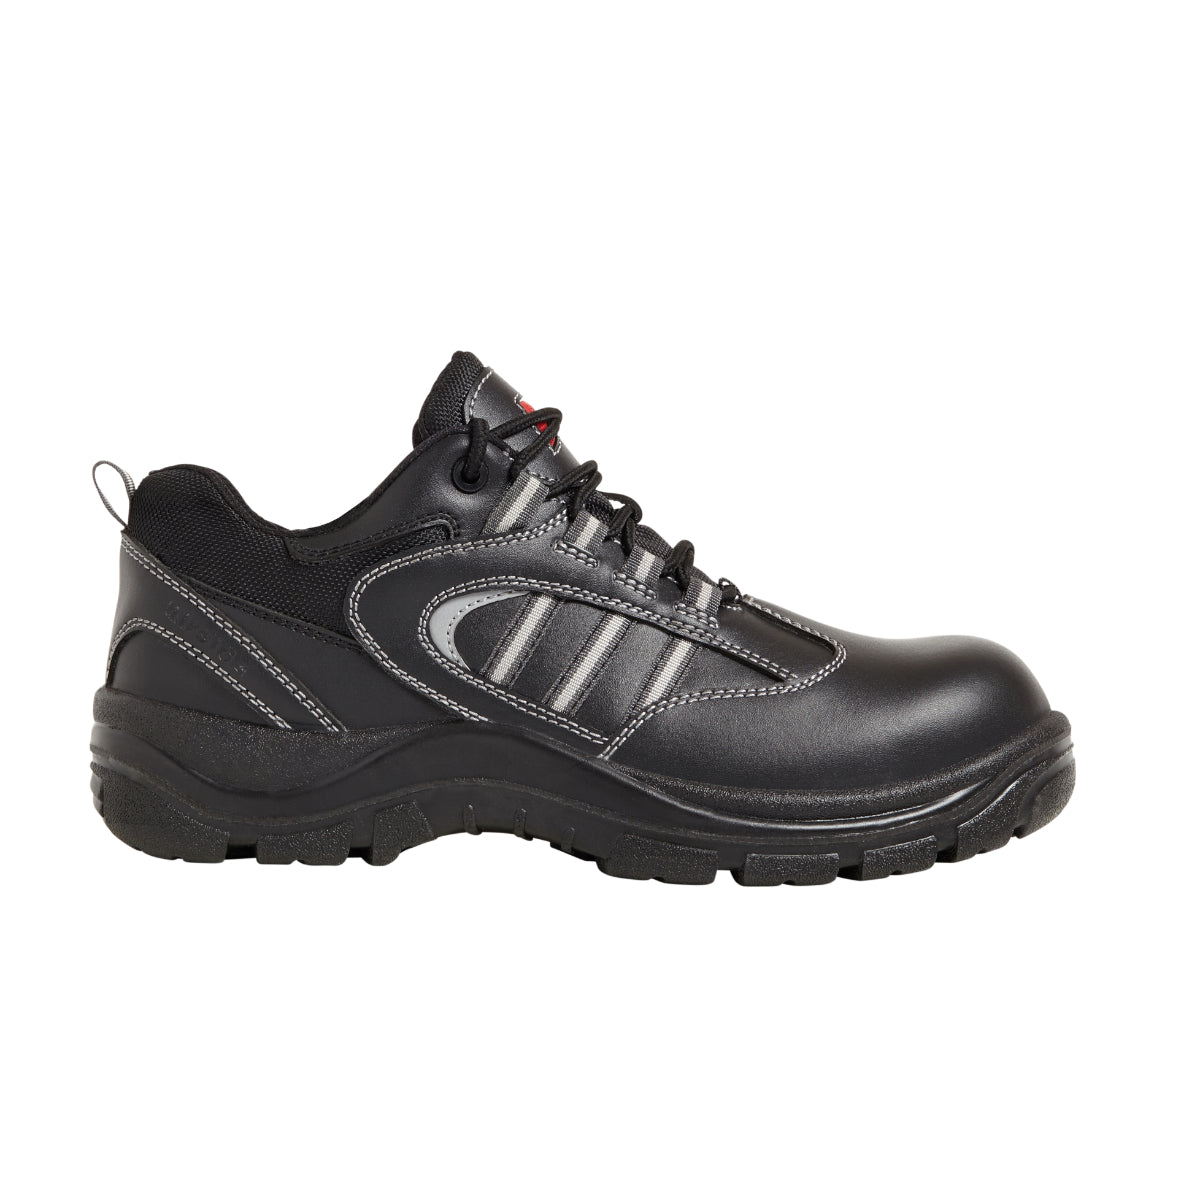 Airside Black Non-Metallic Safety Shoe